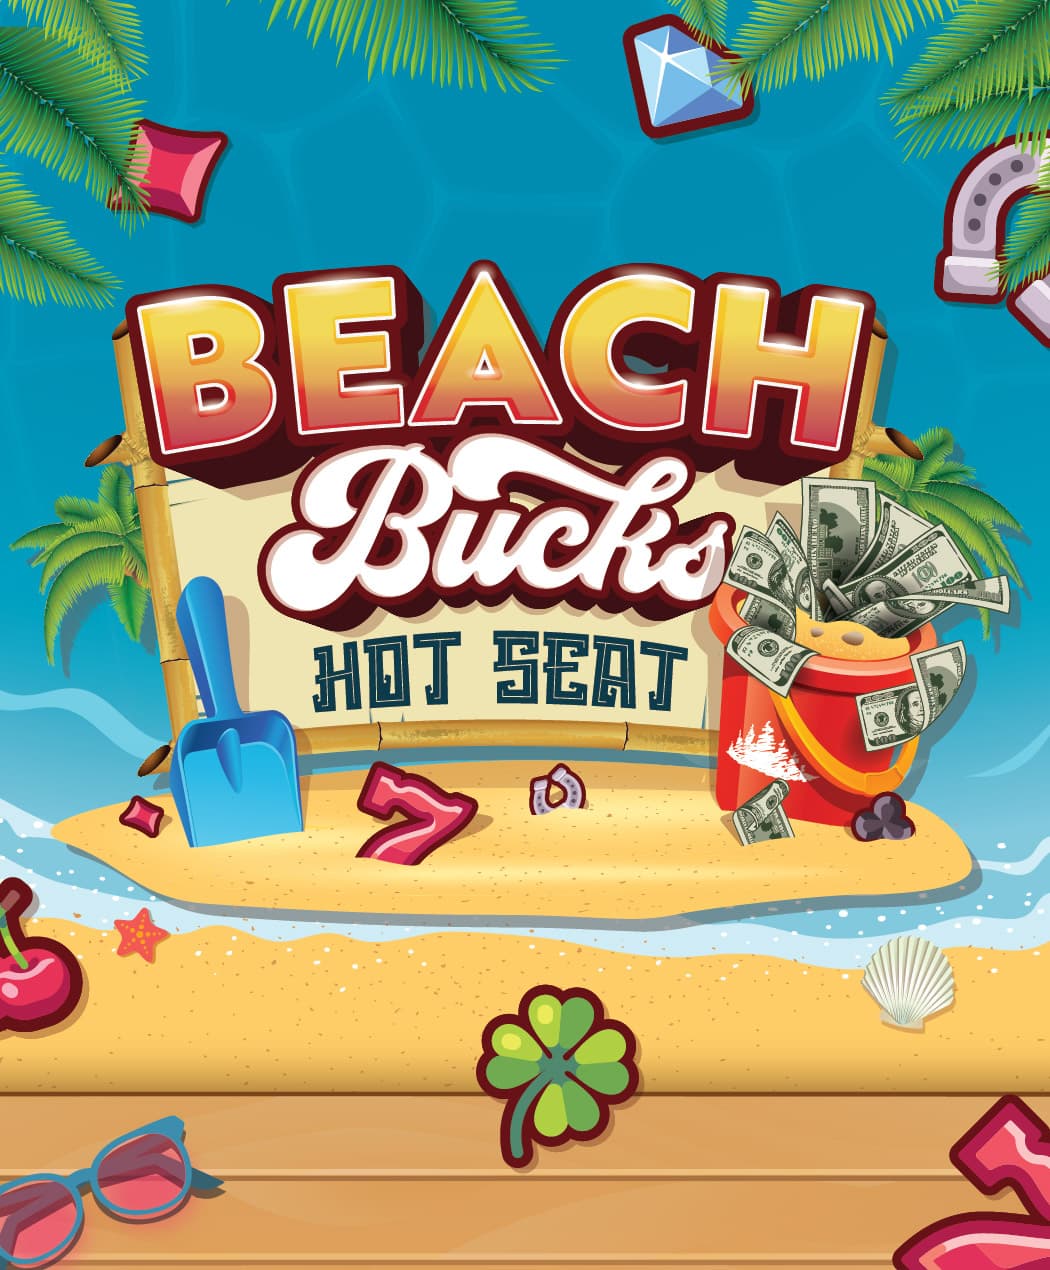 Beach Bucks Hot Seat